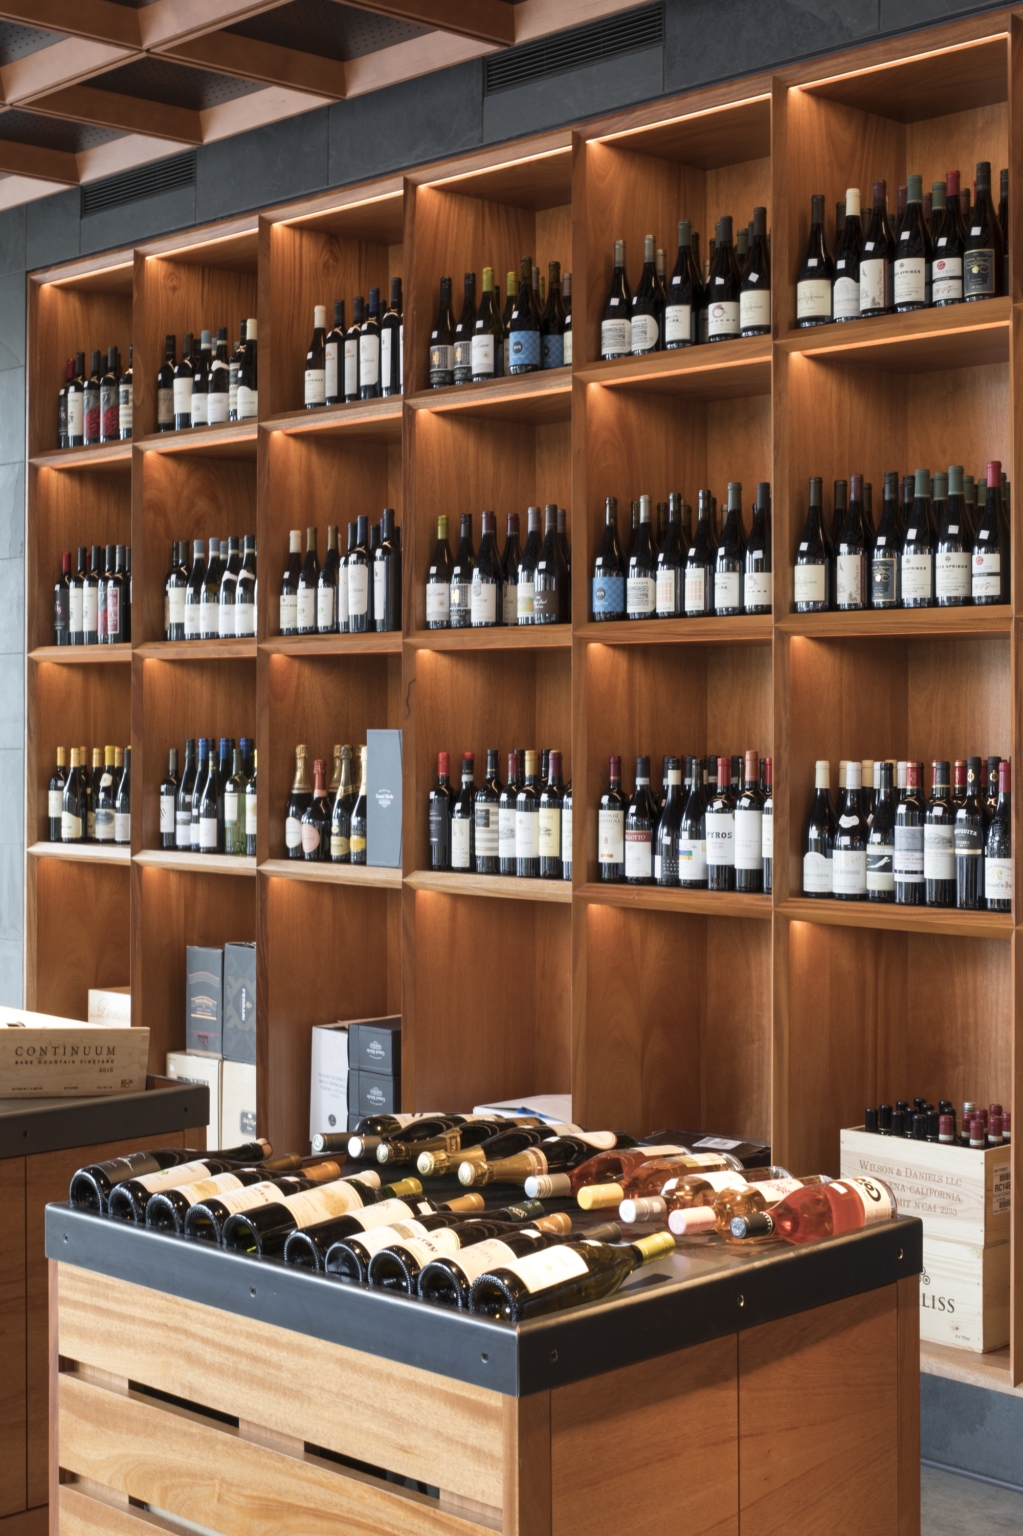 Pullman Wine Bar & Merchant - Hospitality Snapshots